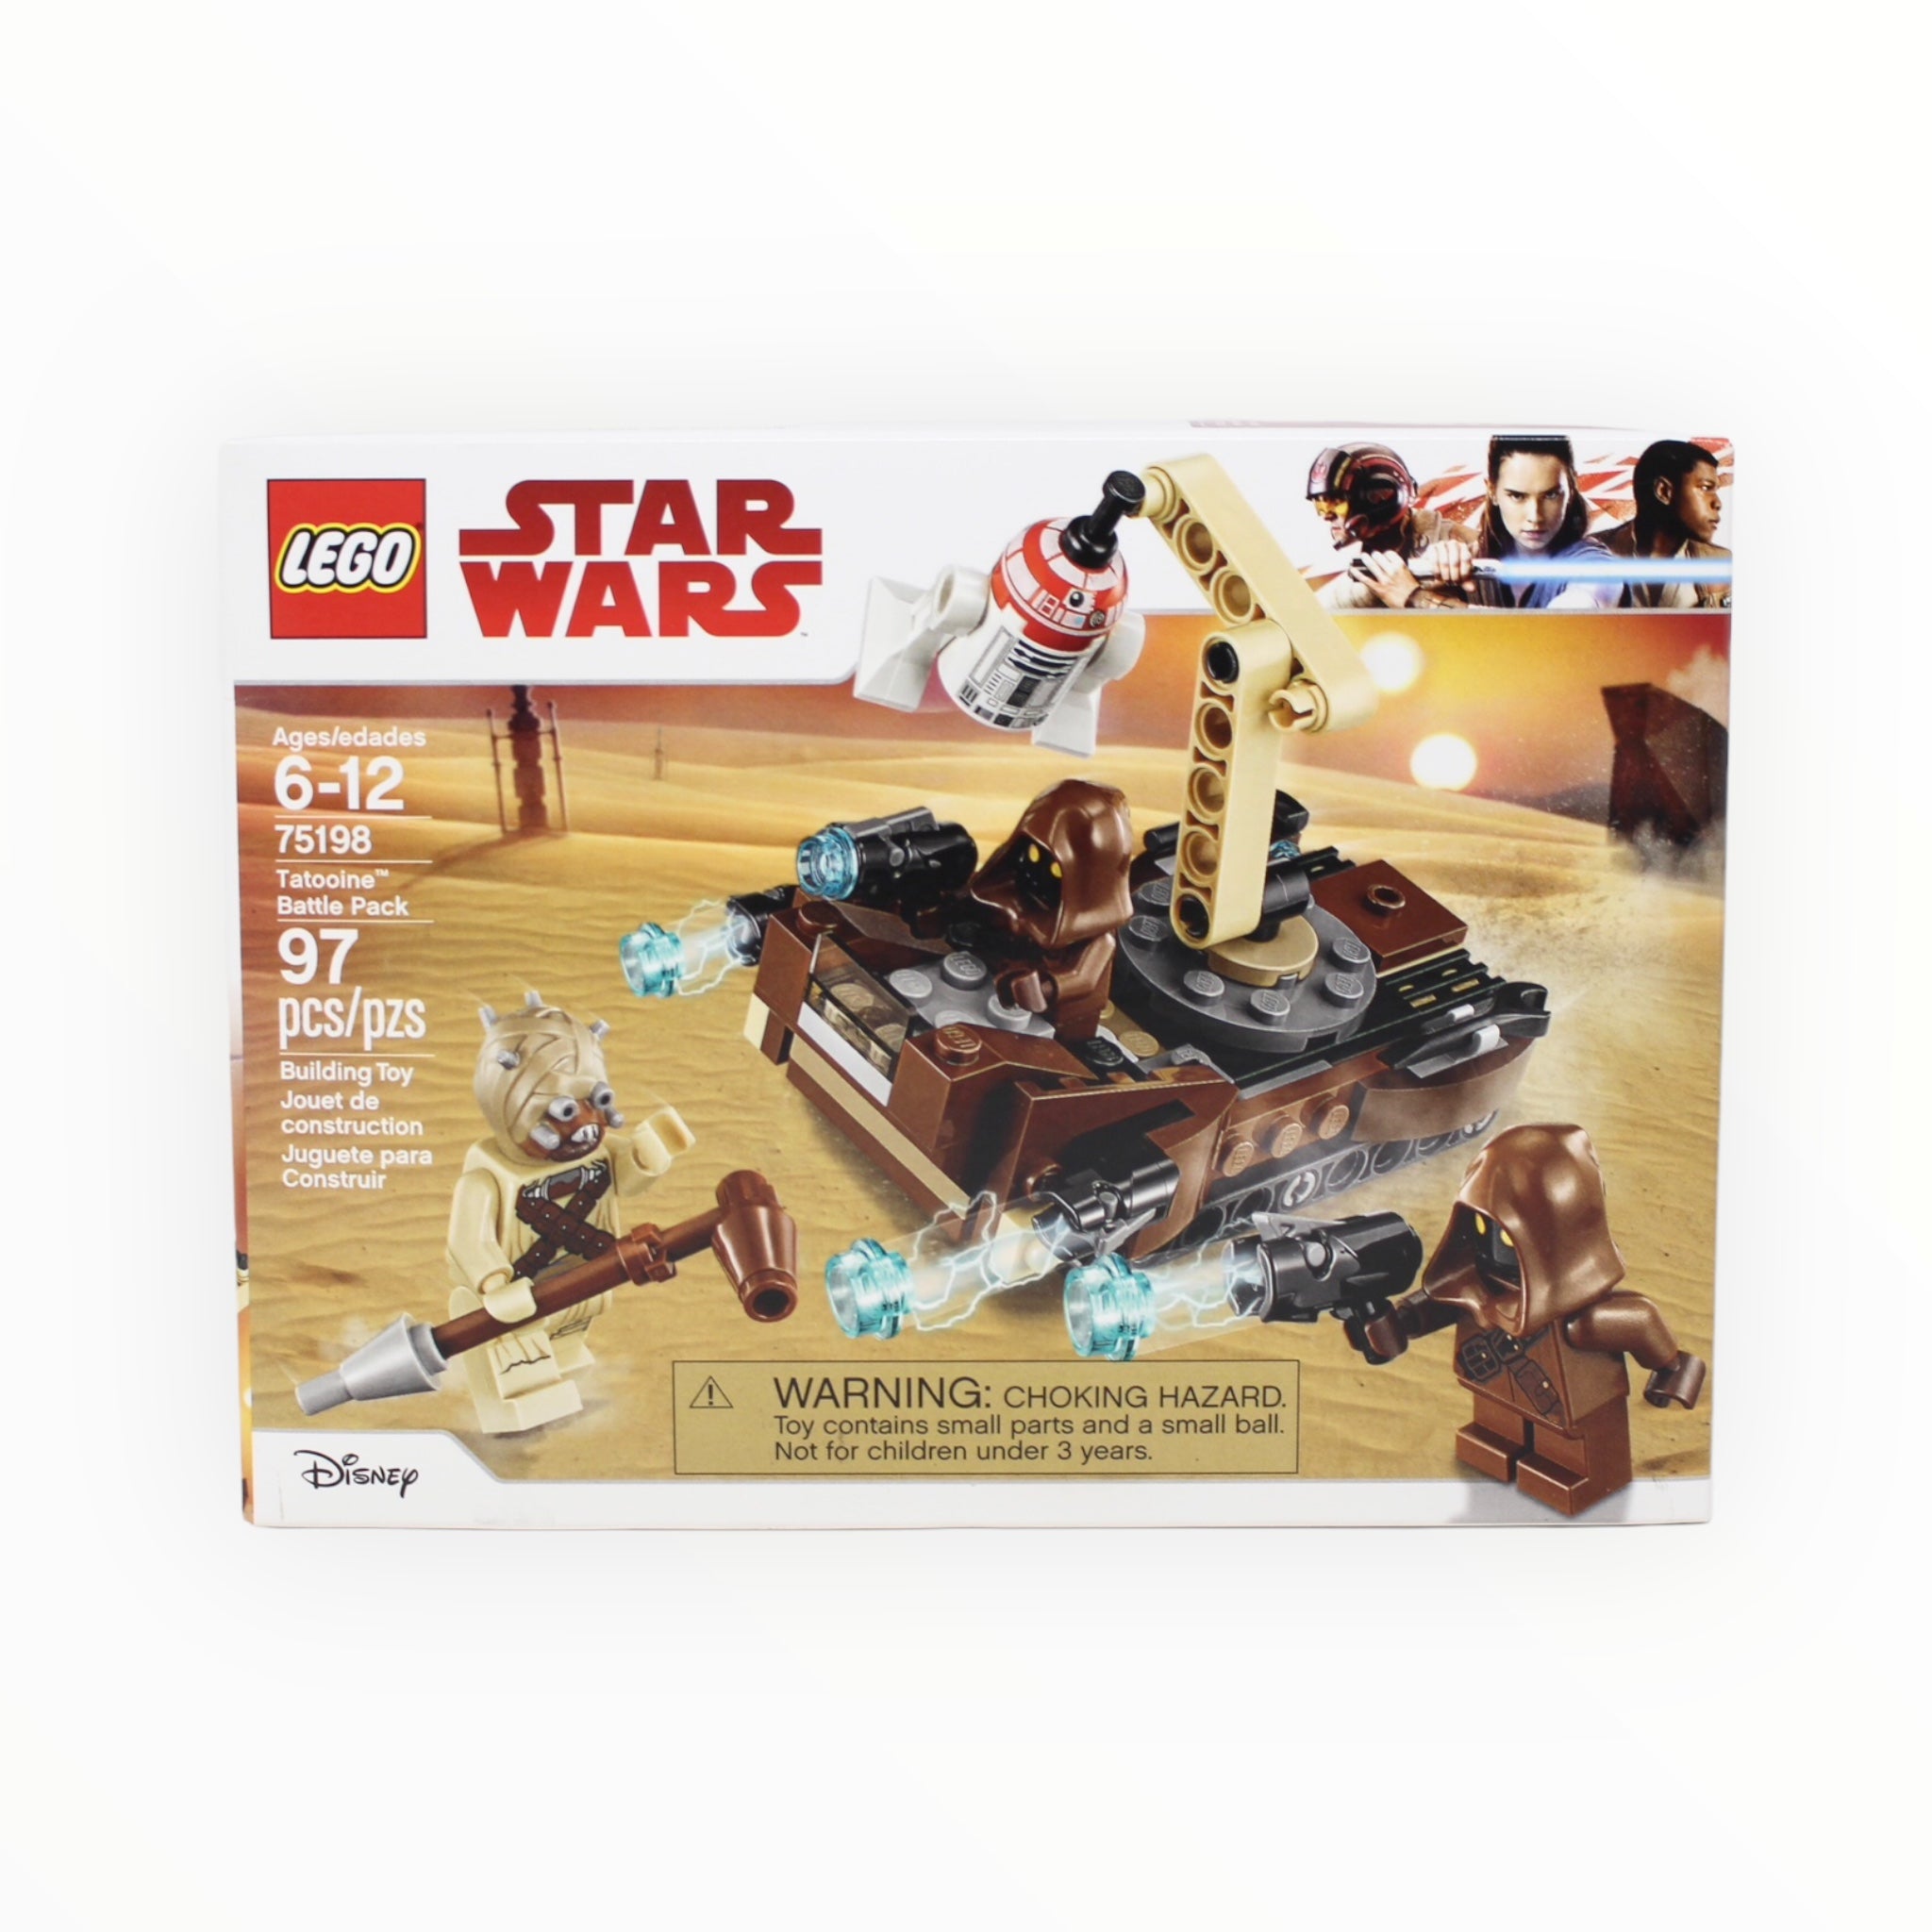 Retired Set 75198 Star Wars Tatooine Battle Pack